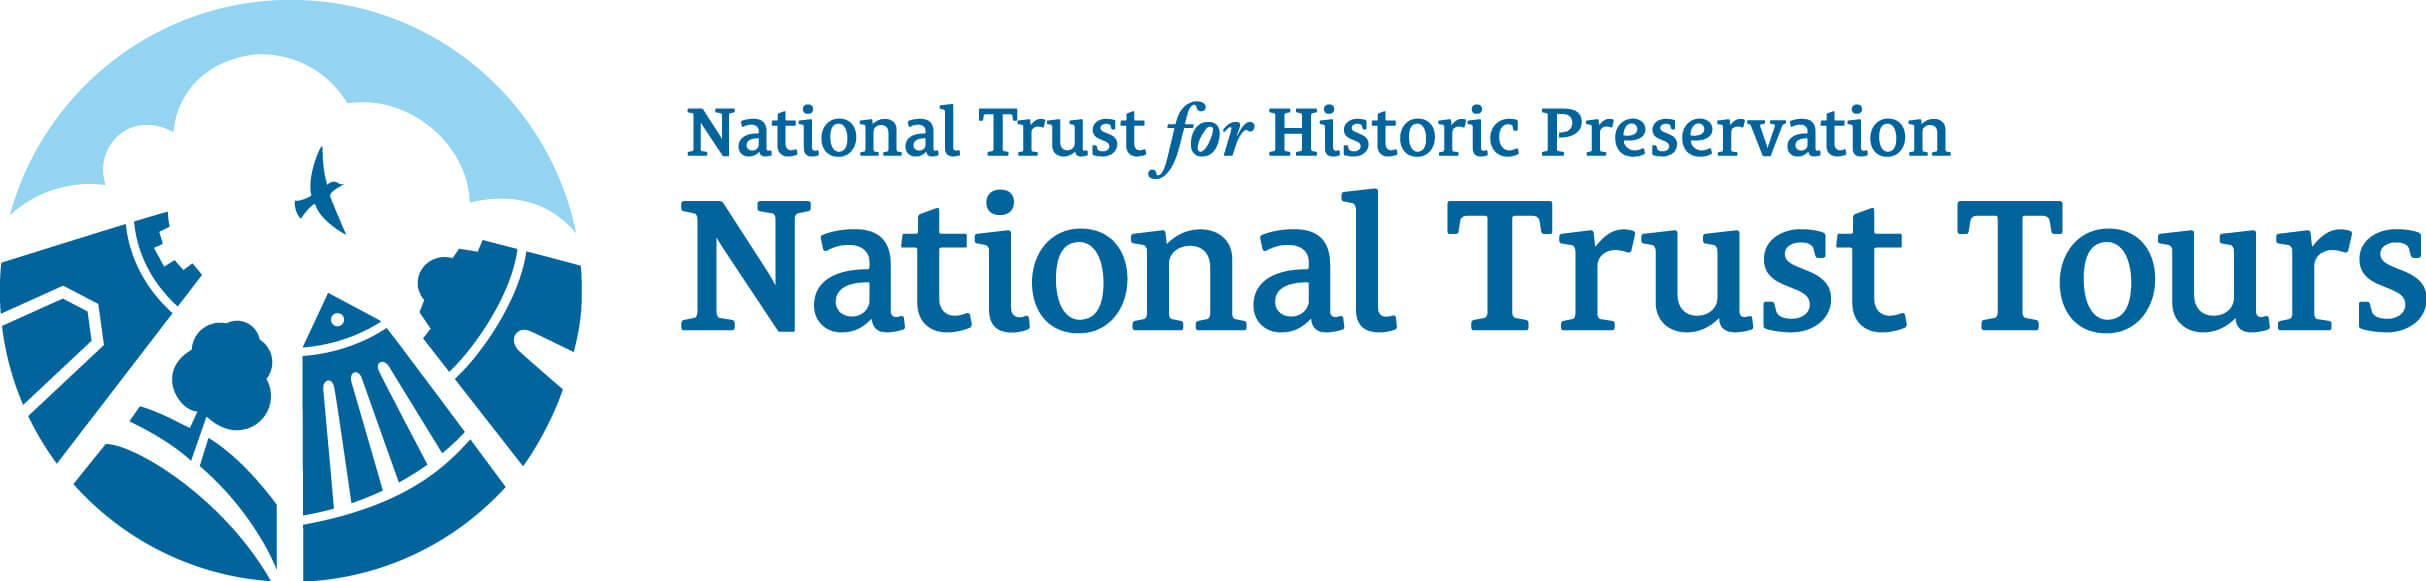 national historic trust tours